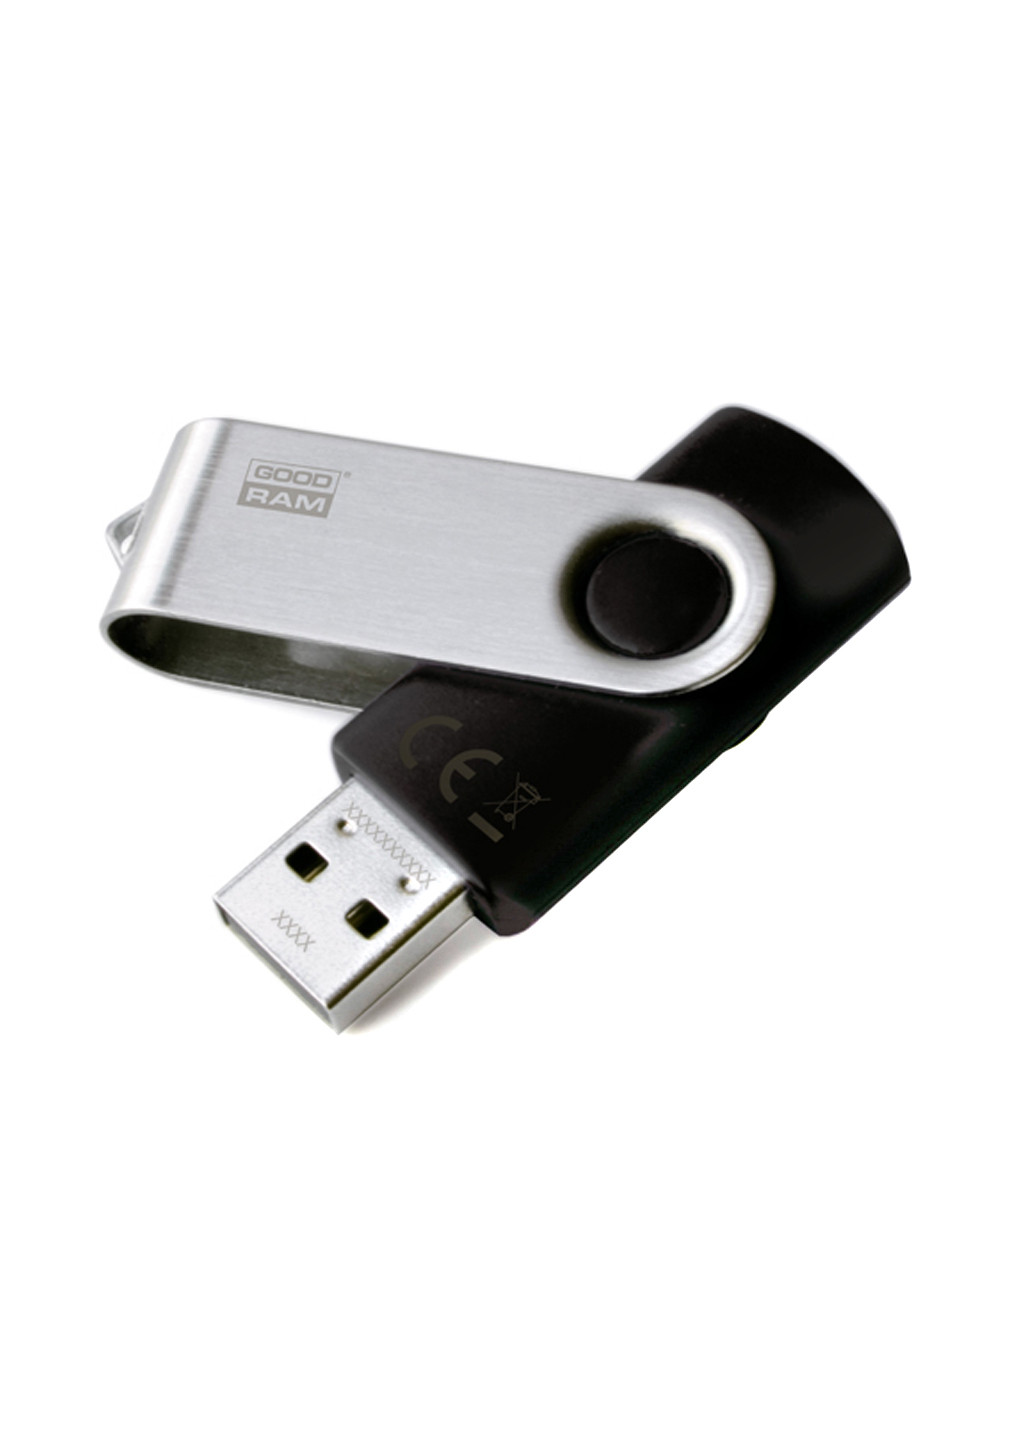 Флеш память USB UTS3 64GB USB 3.0 Black (UTS3-0640K0R11) Goodram флеш память usb goodram uts3 64gb usb 3.0 black (uts3-0640k0r11) (136742788)